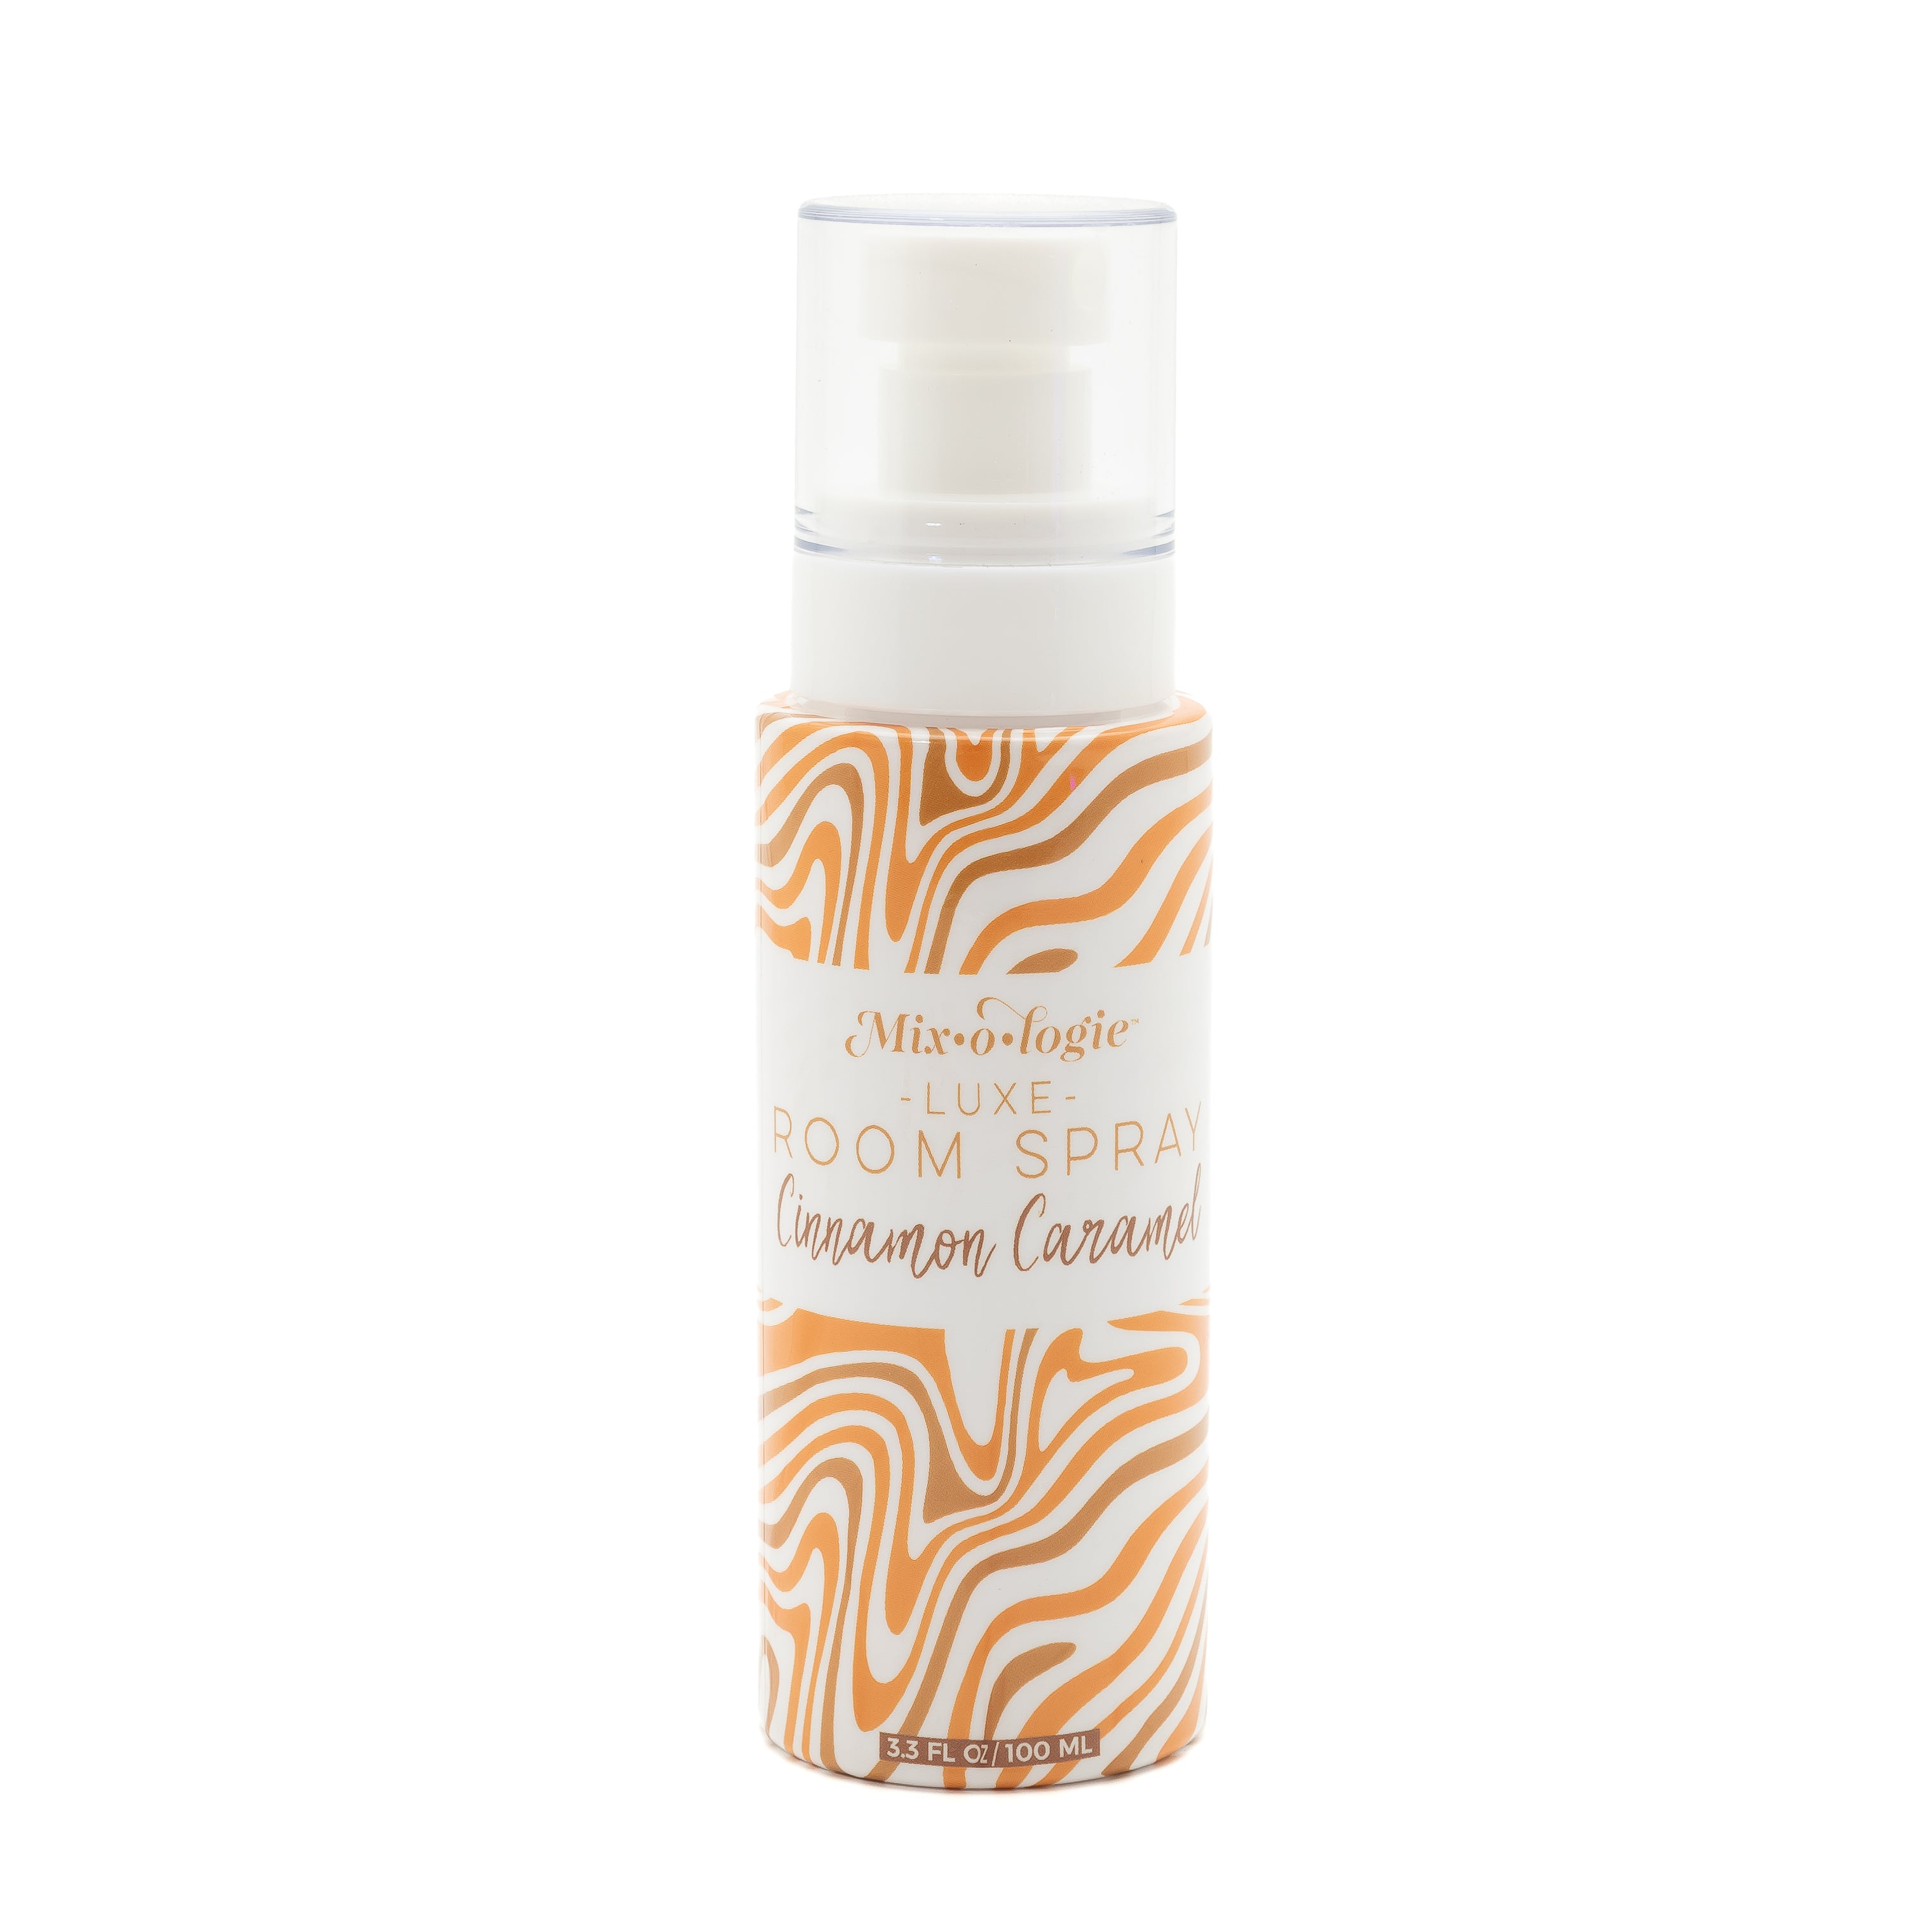 Cinnamon Caramel Luxe Room Spray